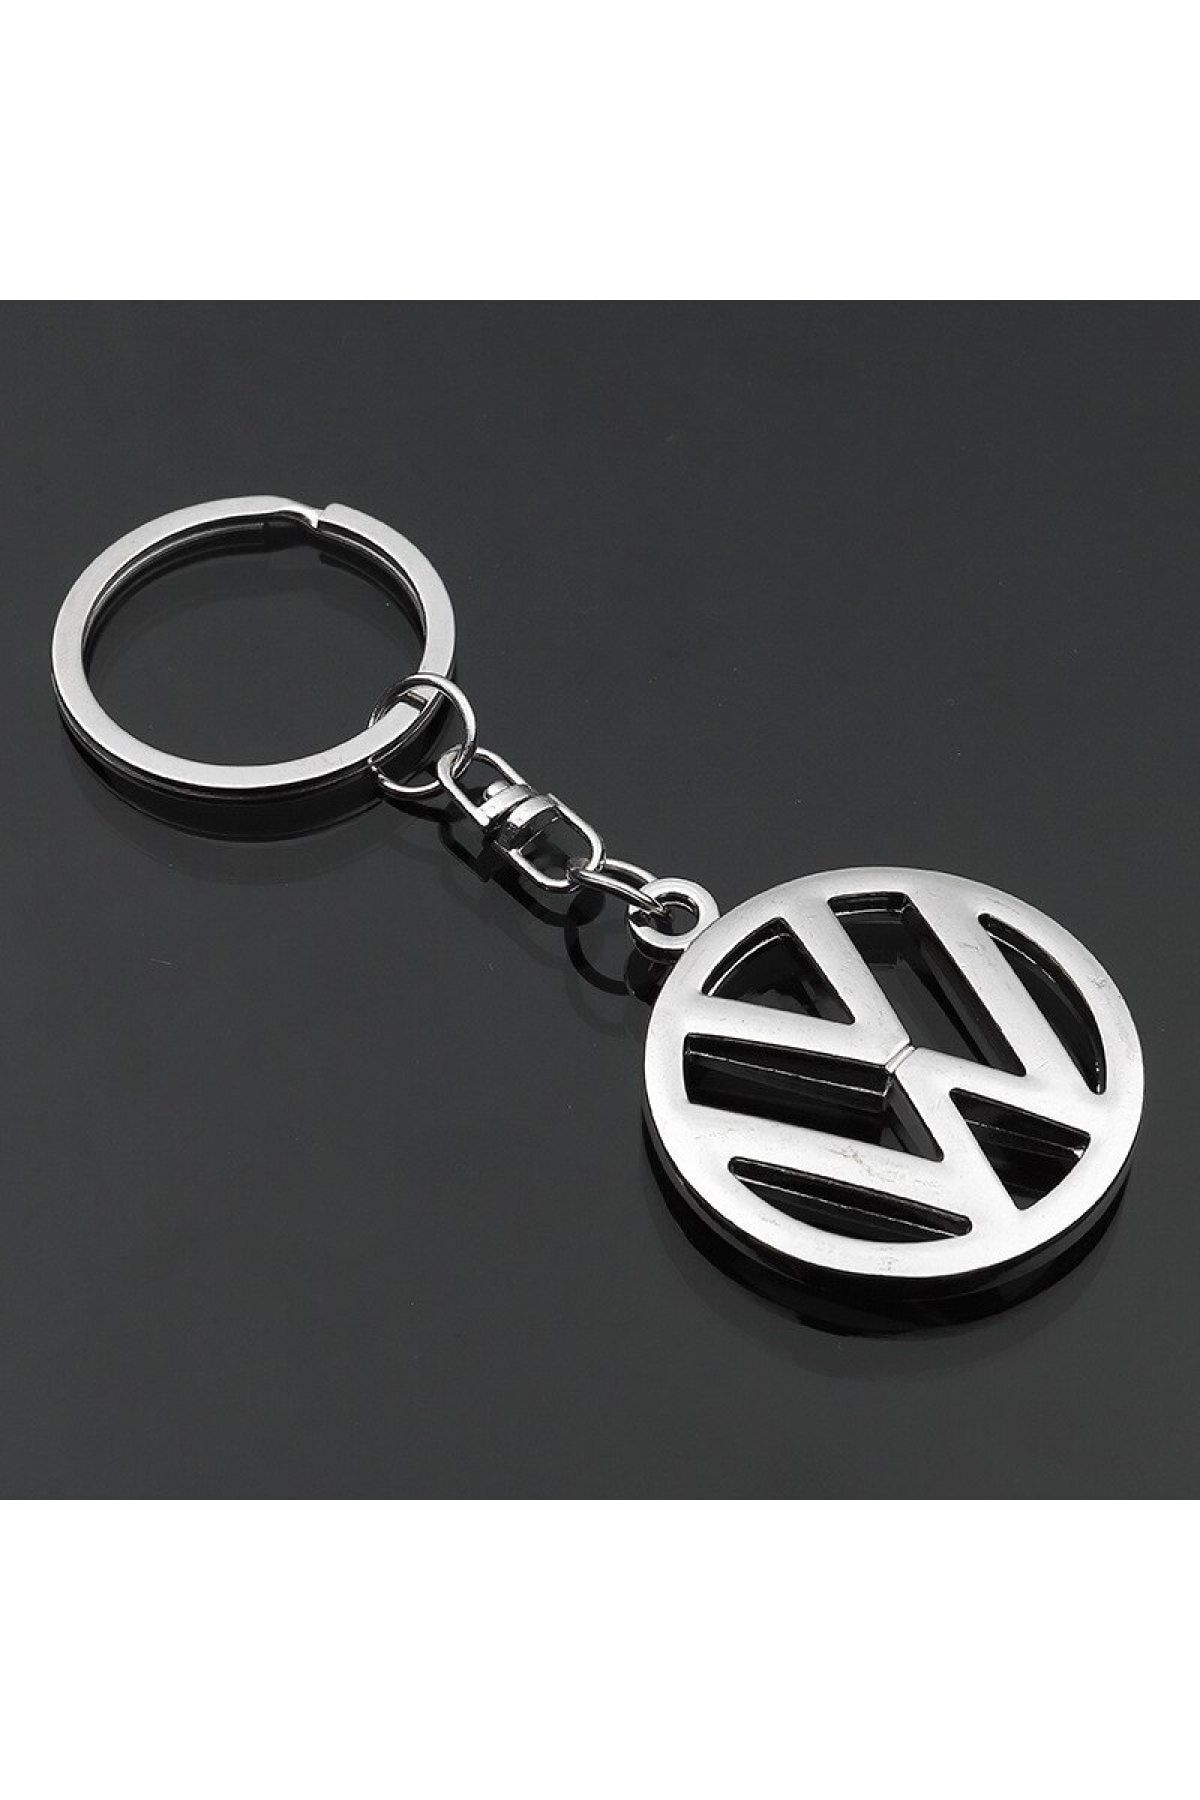 GARDENAUTO Volkswagen Passat B6 2005-2010 Anahtarlık 3d Metal Otomobil Anahtarlığı - Krom Kaplamalı